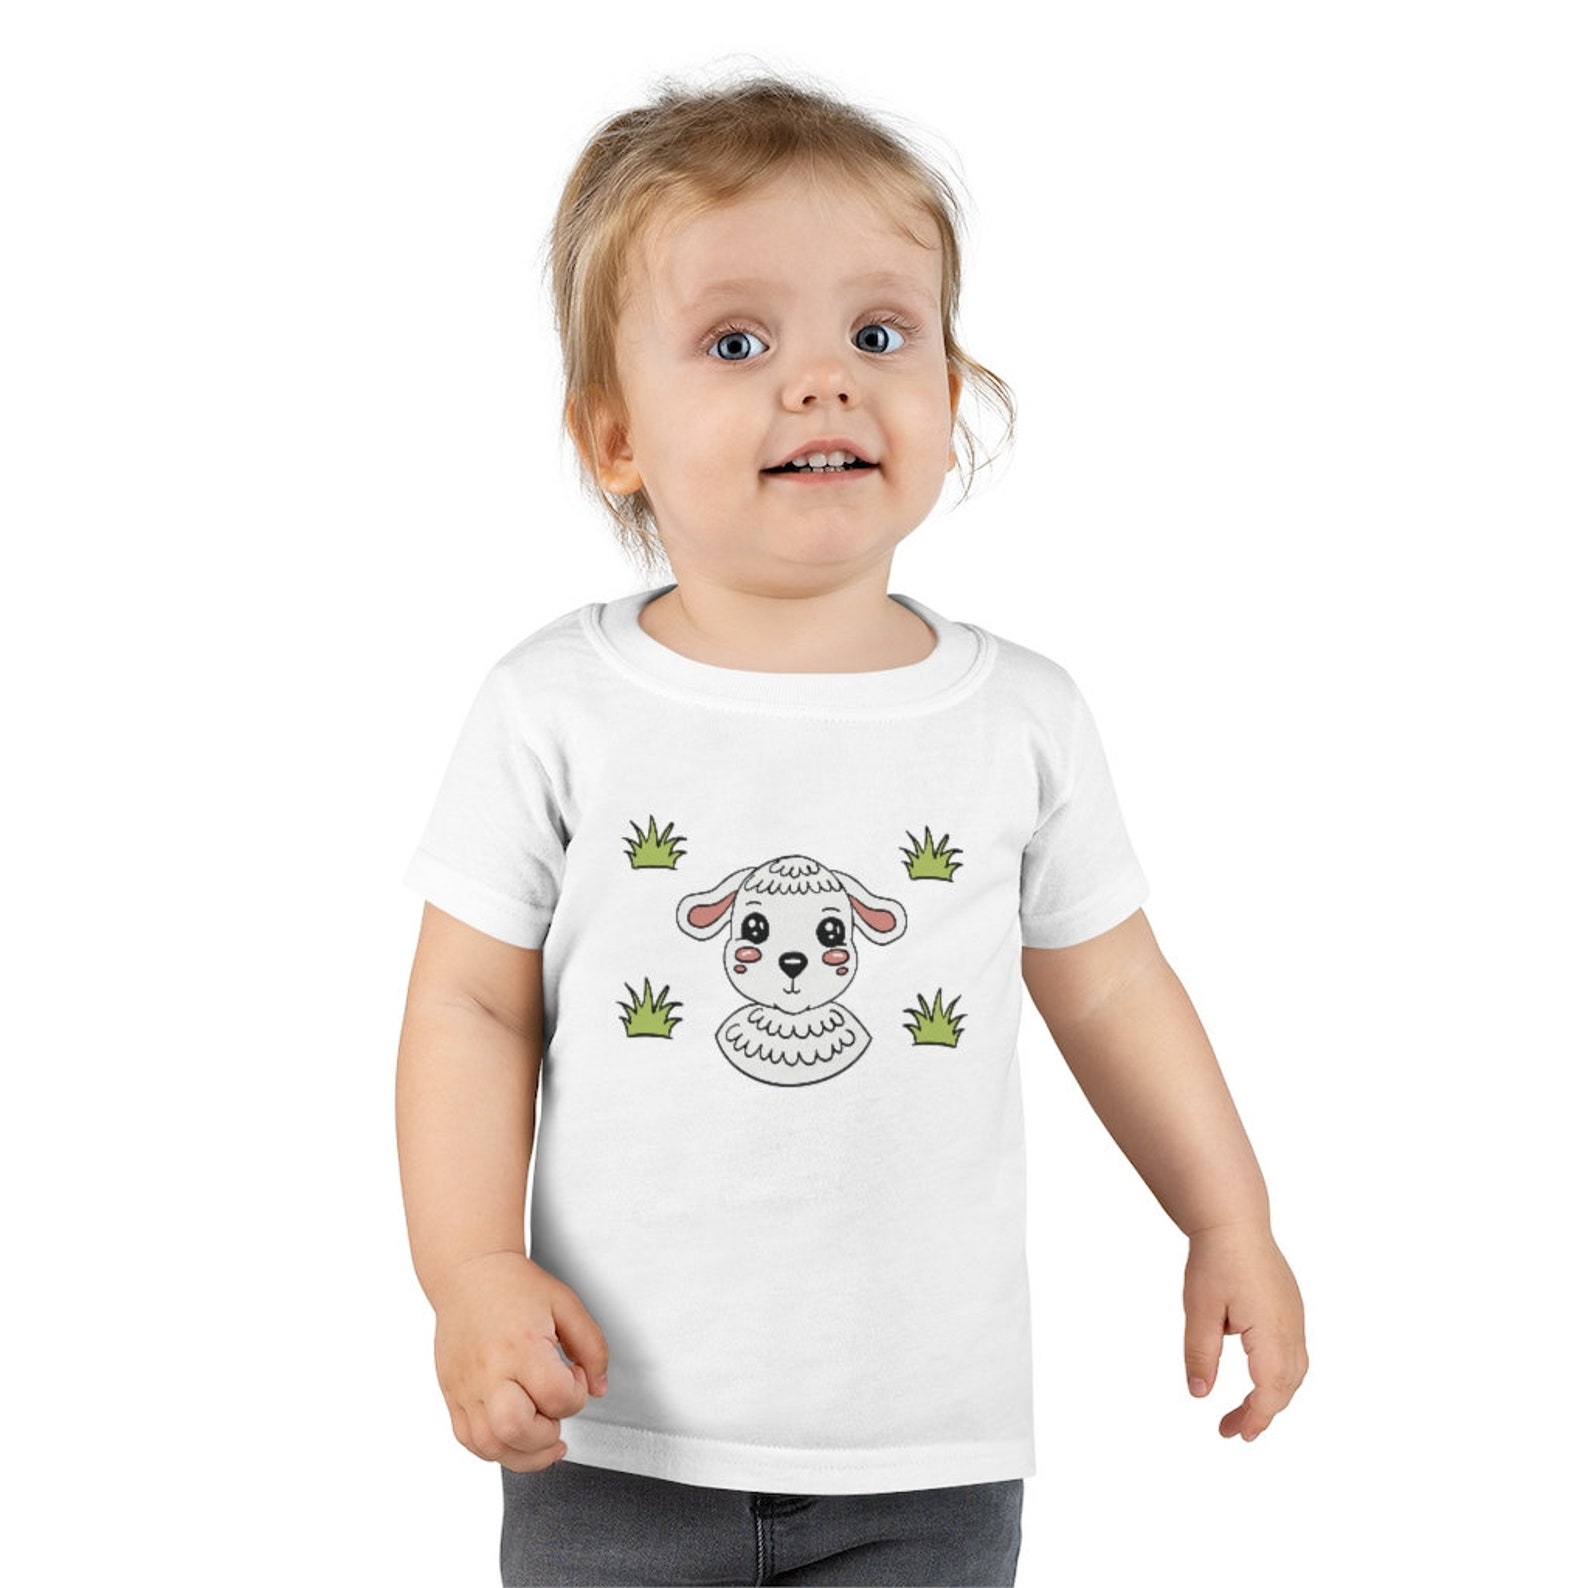 Sheep Toddler T-shirt animal shirt baby shirt sheep shirt | Etsy